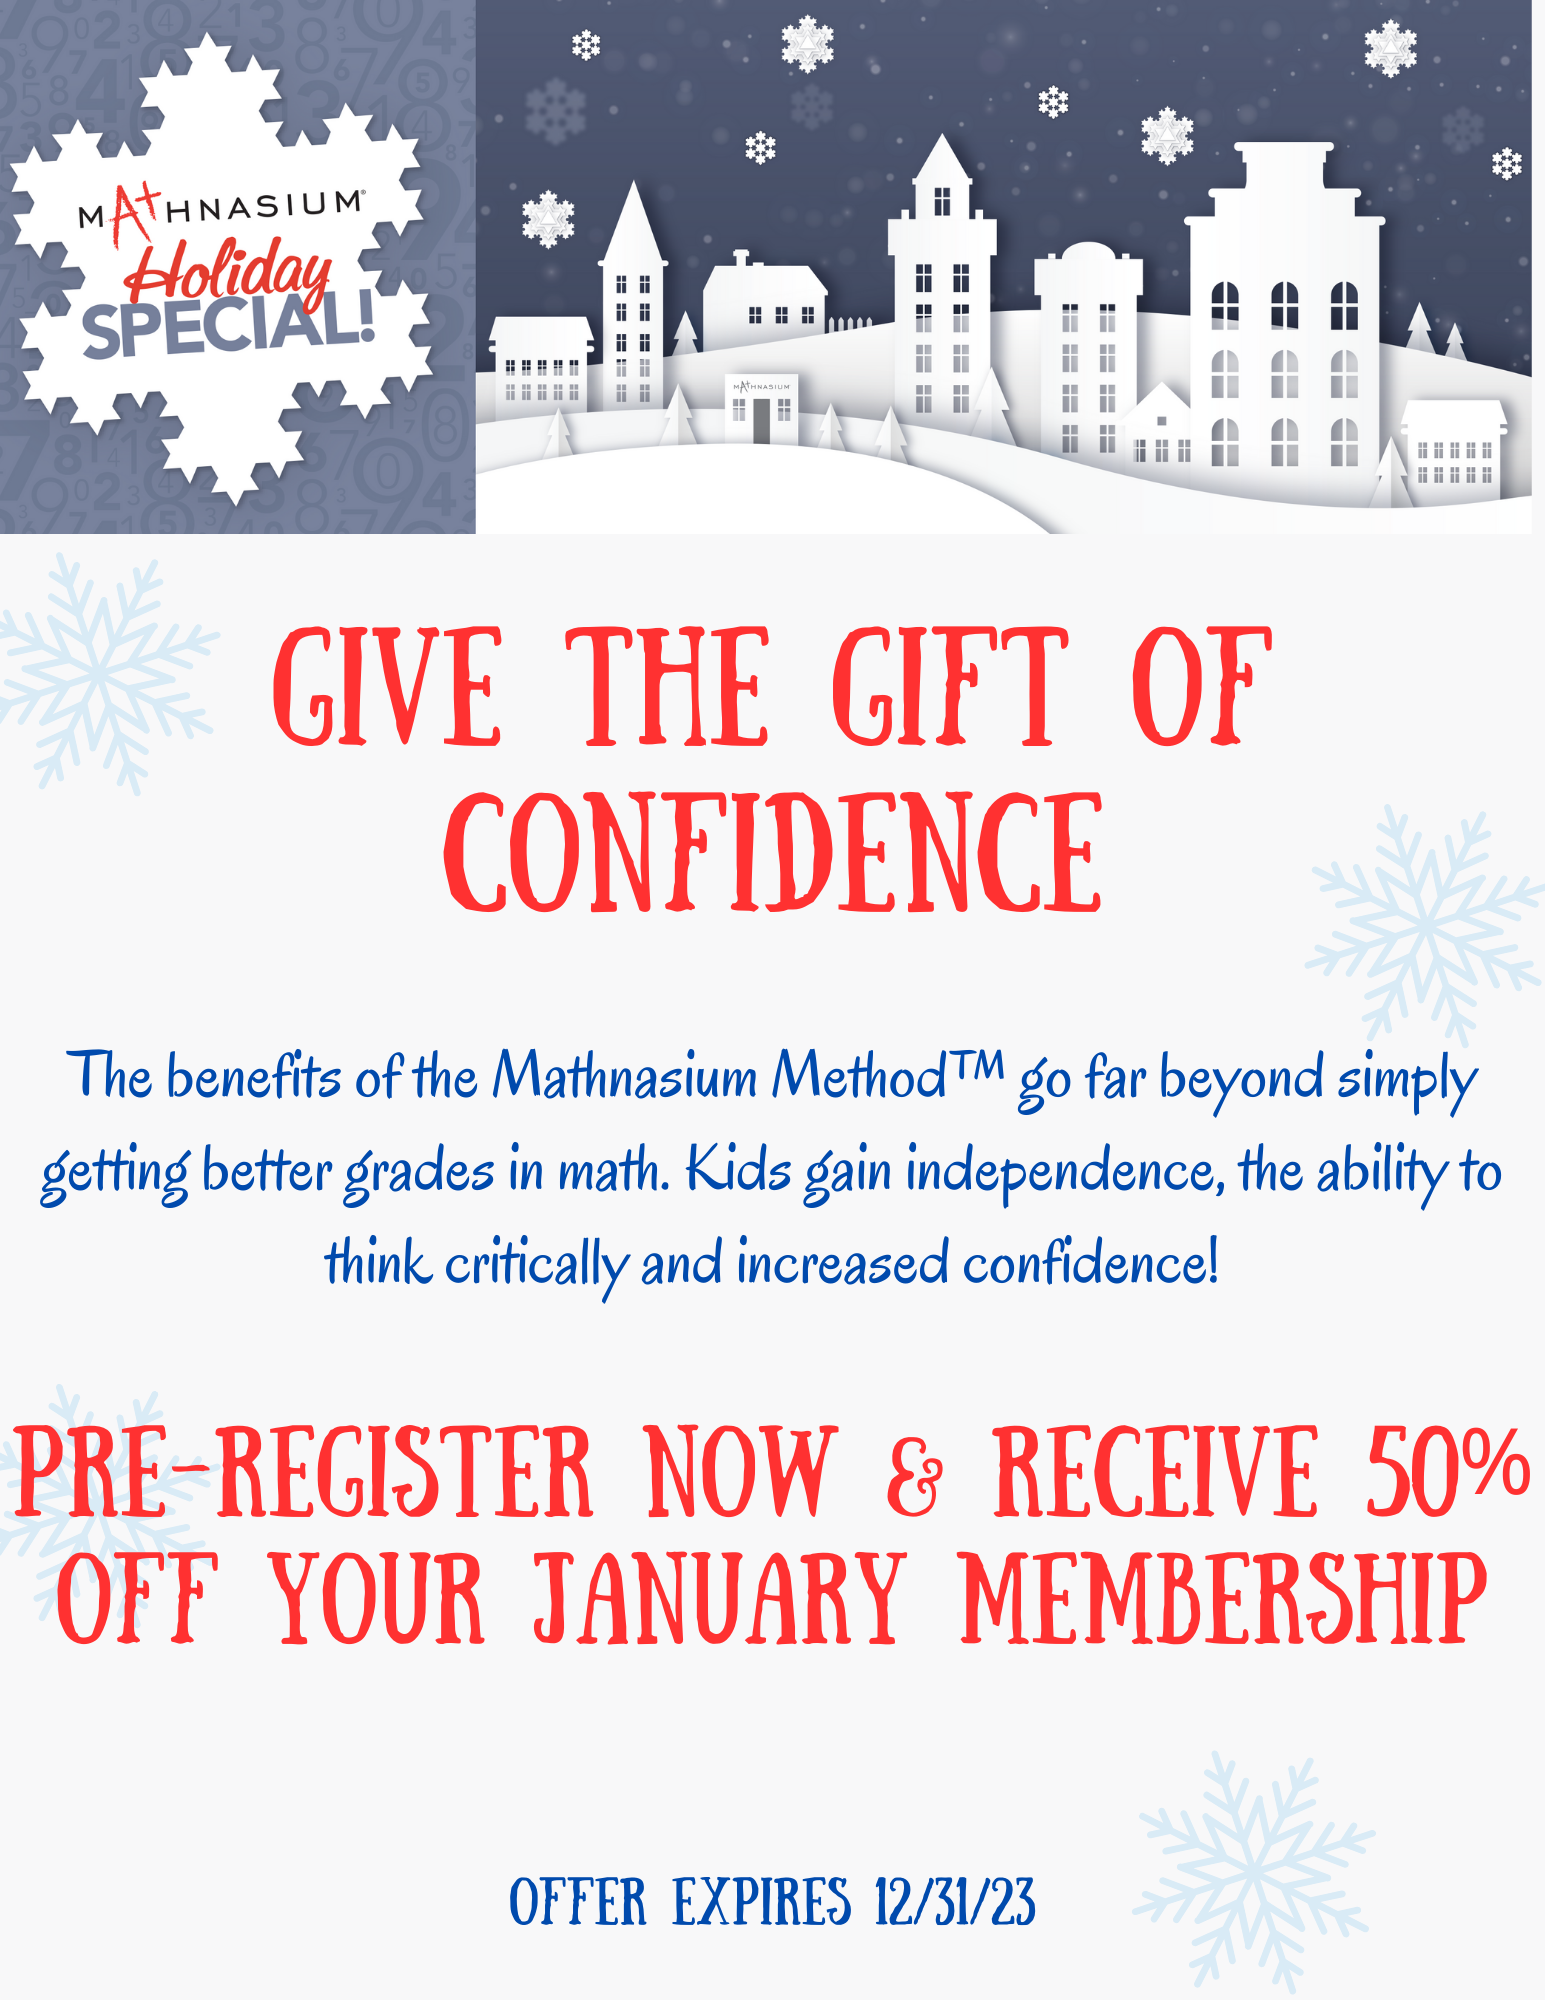 Mathnasium Holiday Savings!